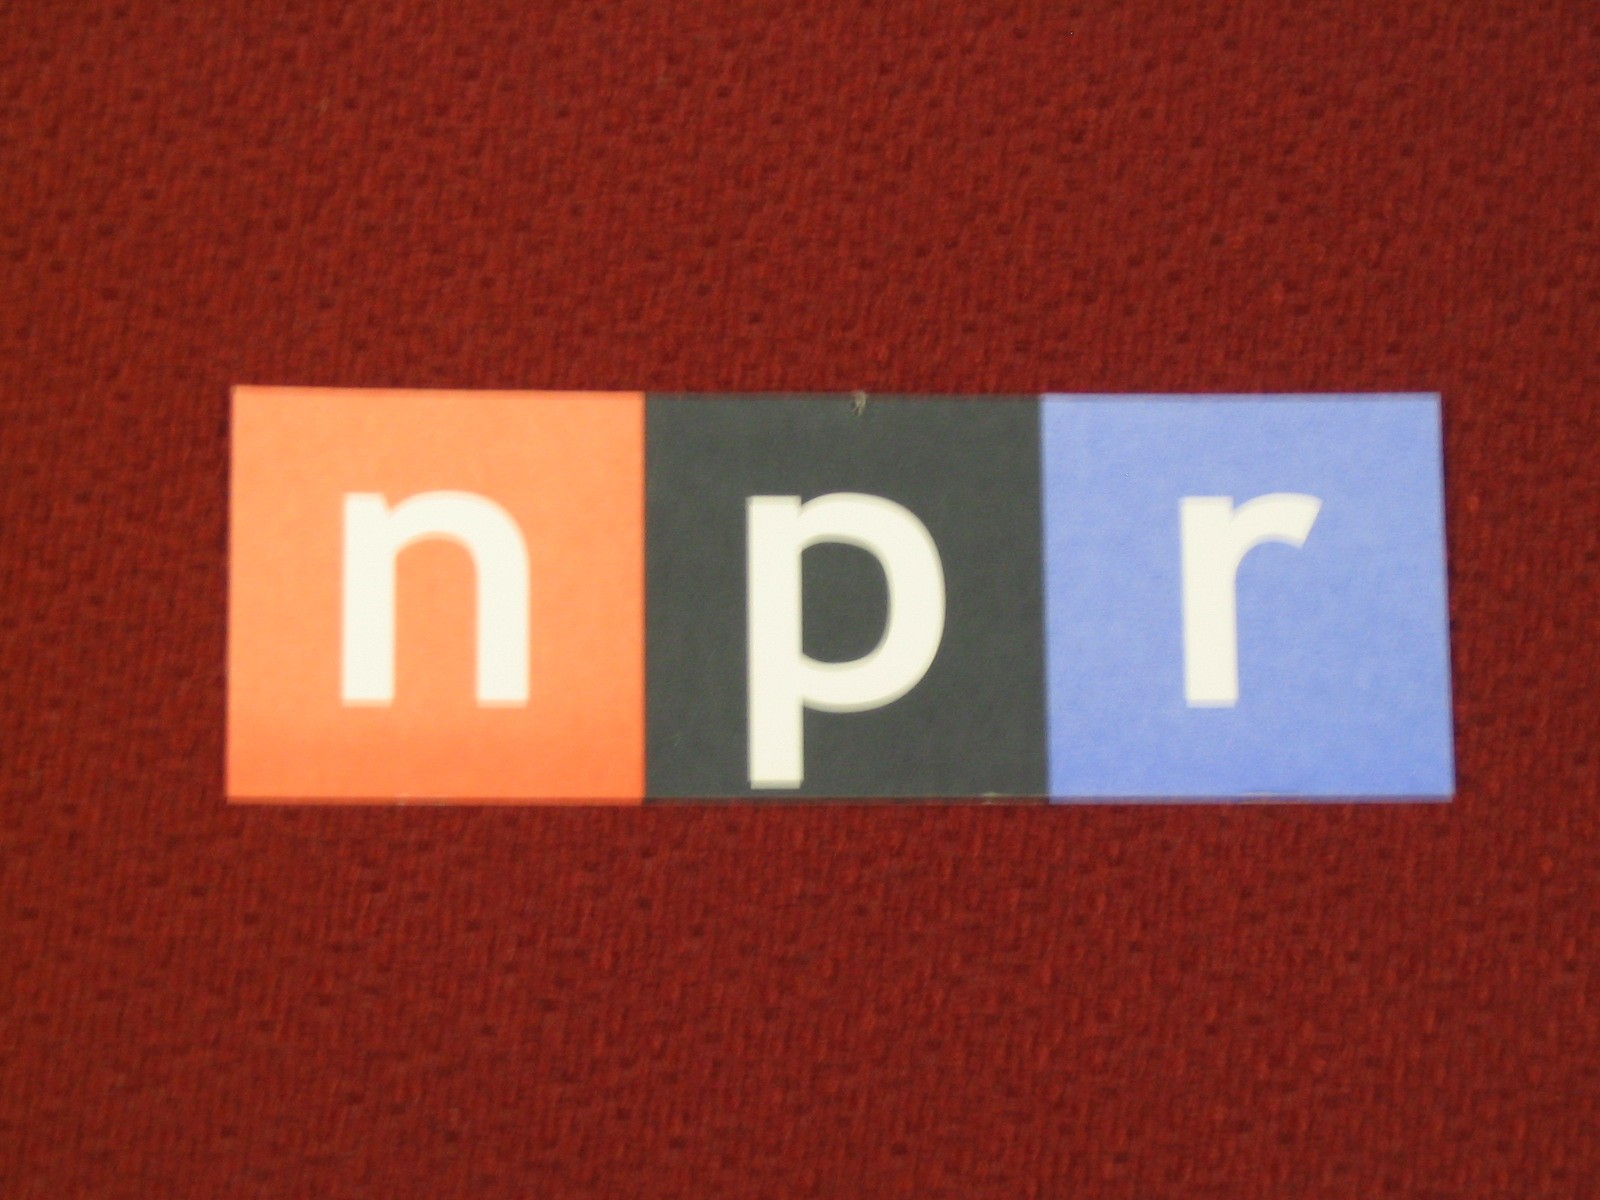 [NPR.jpg]